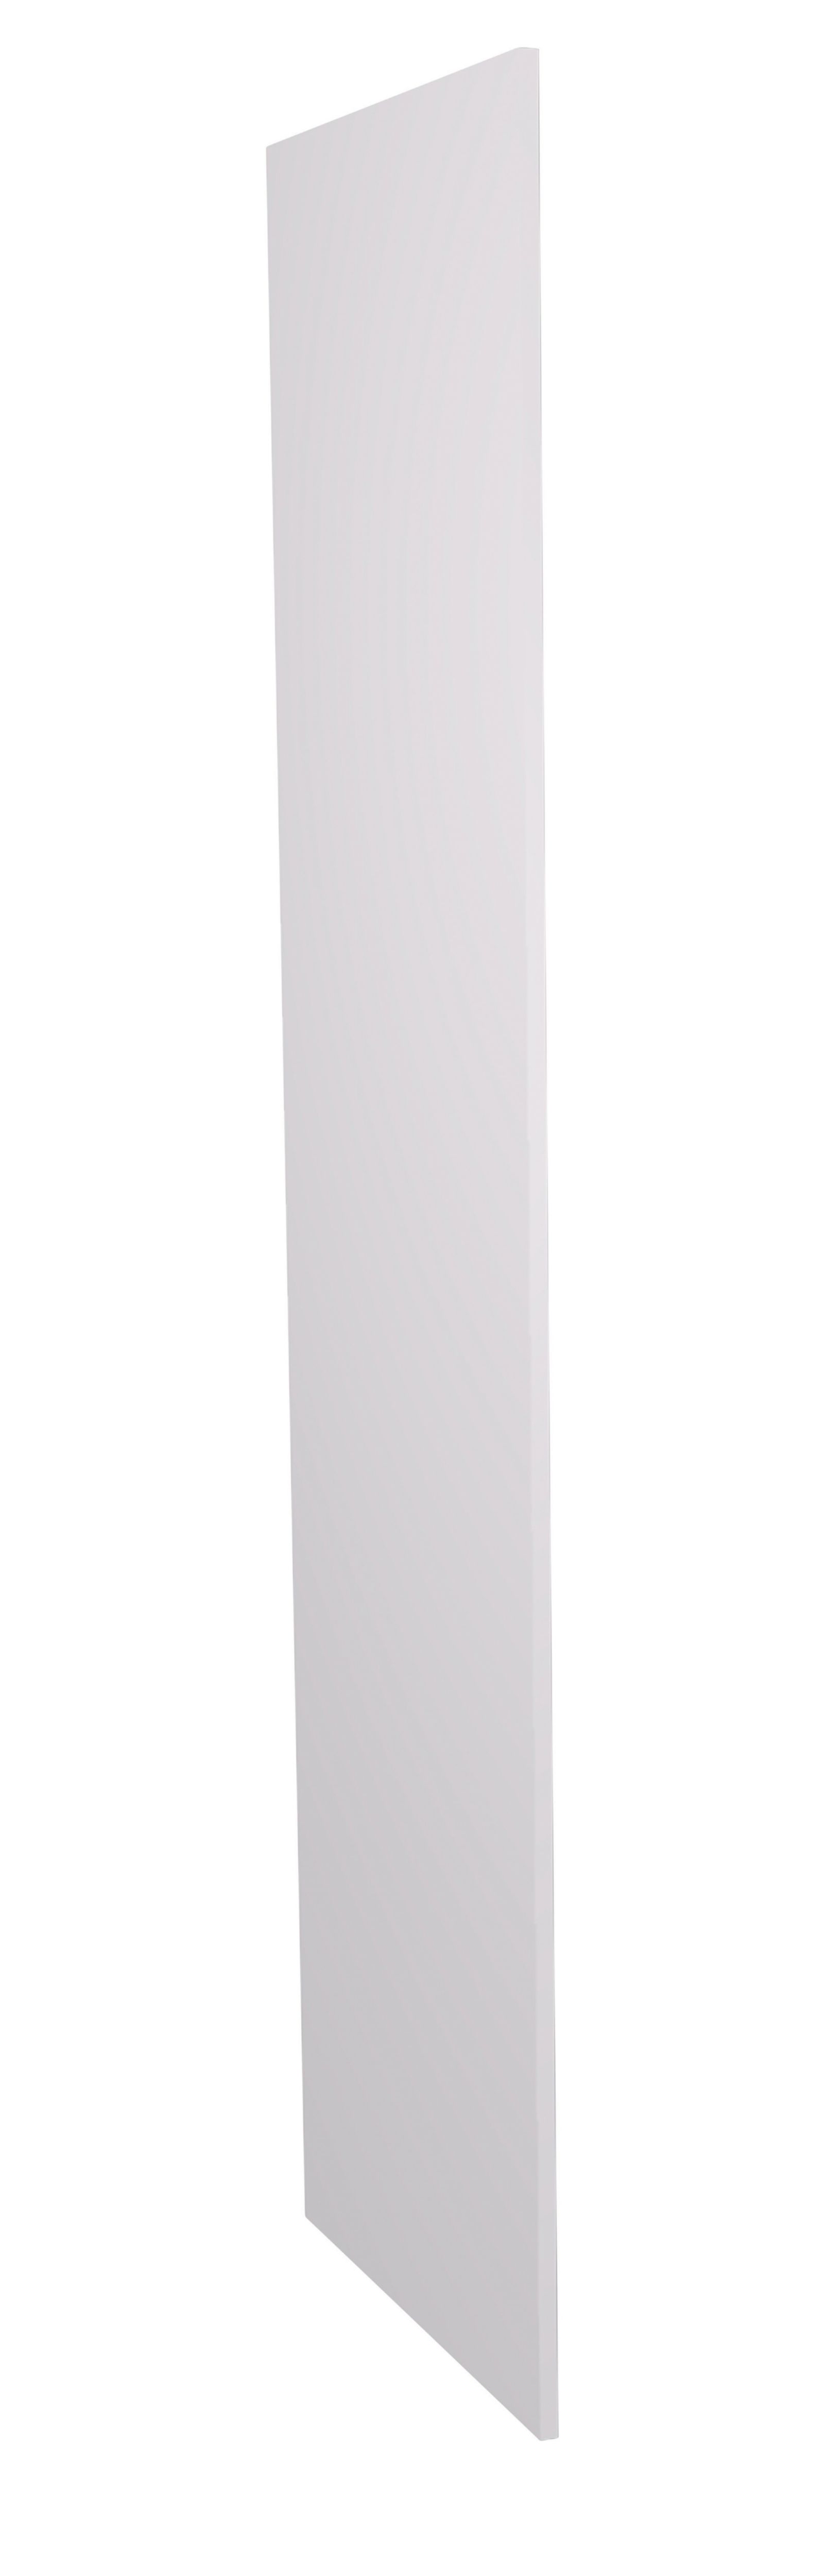 Wickes Orlando/Madison White Decor Tall Panel - 18mm